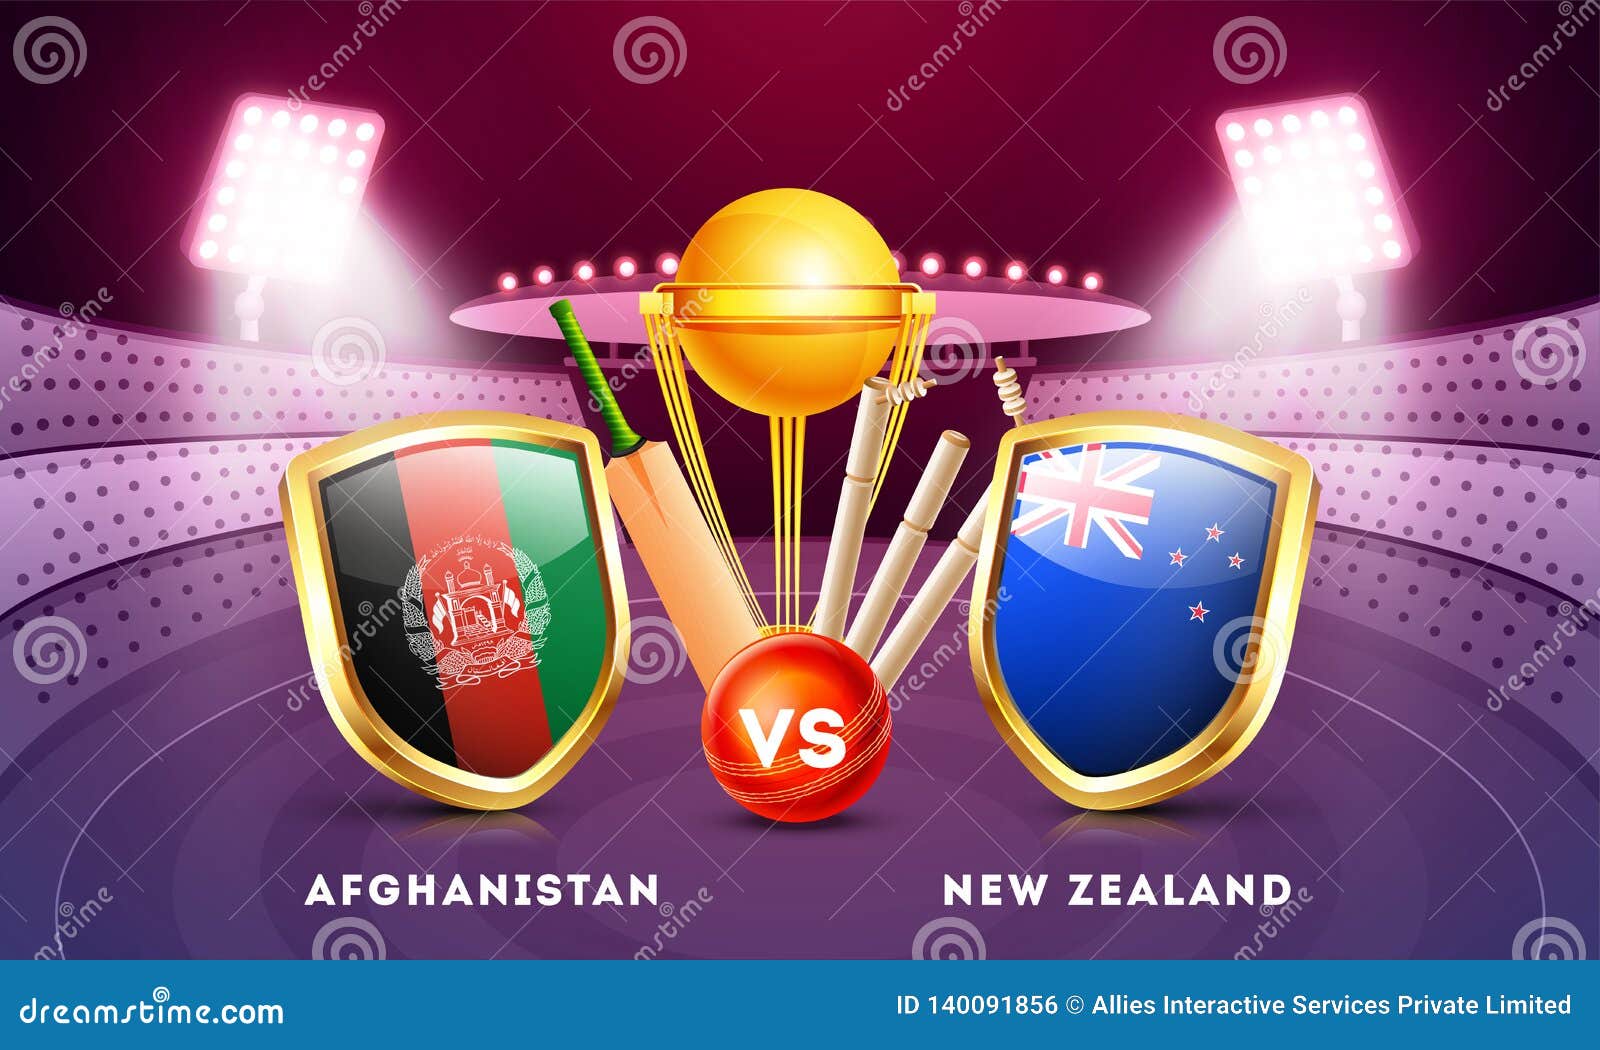 Zealand new afghanistan vs New Zealand